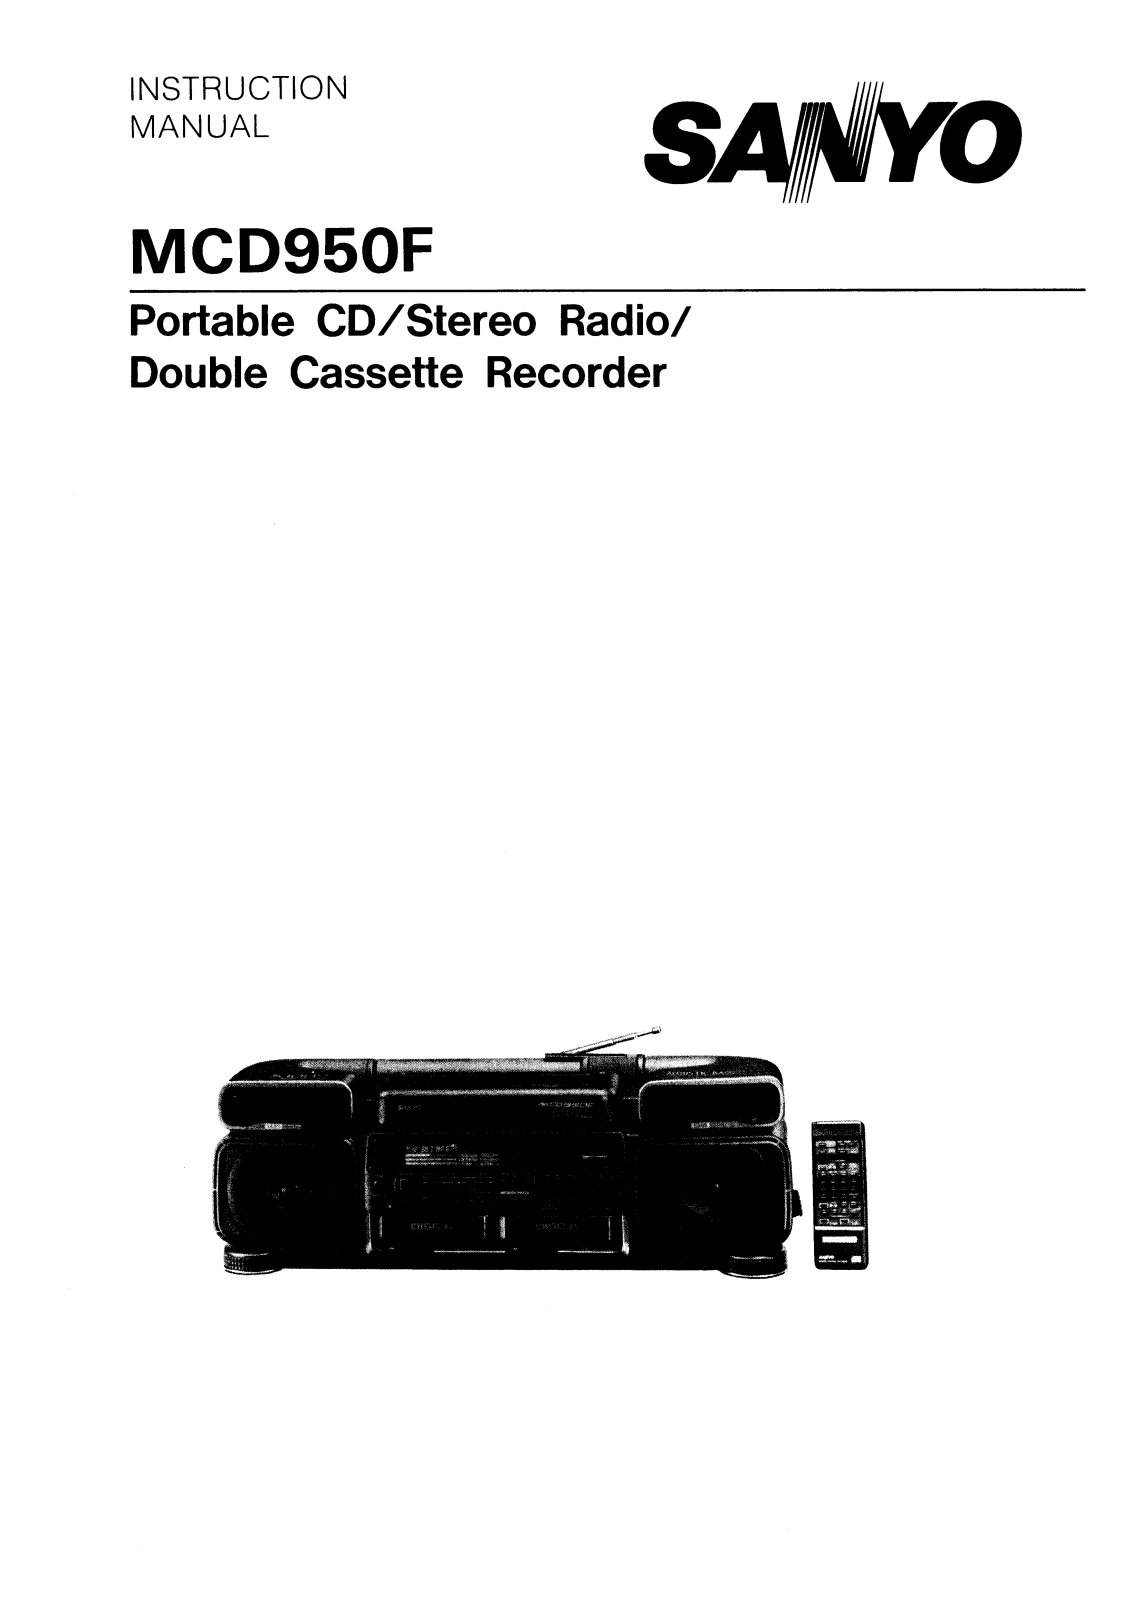 Sanyo MCD950F Instruction Manual